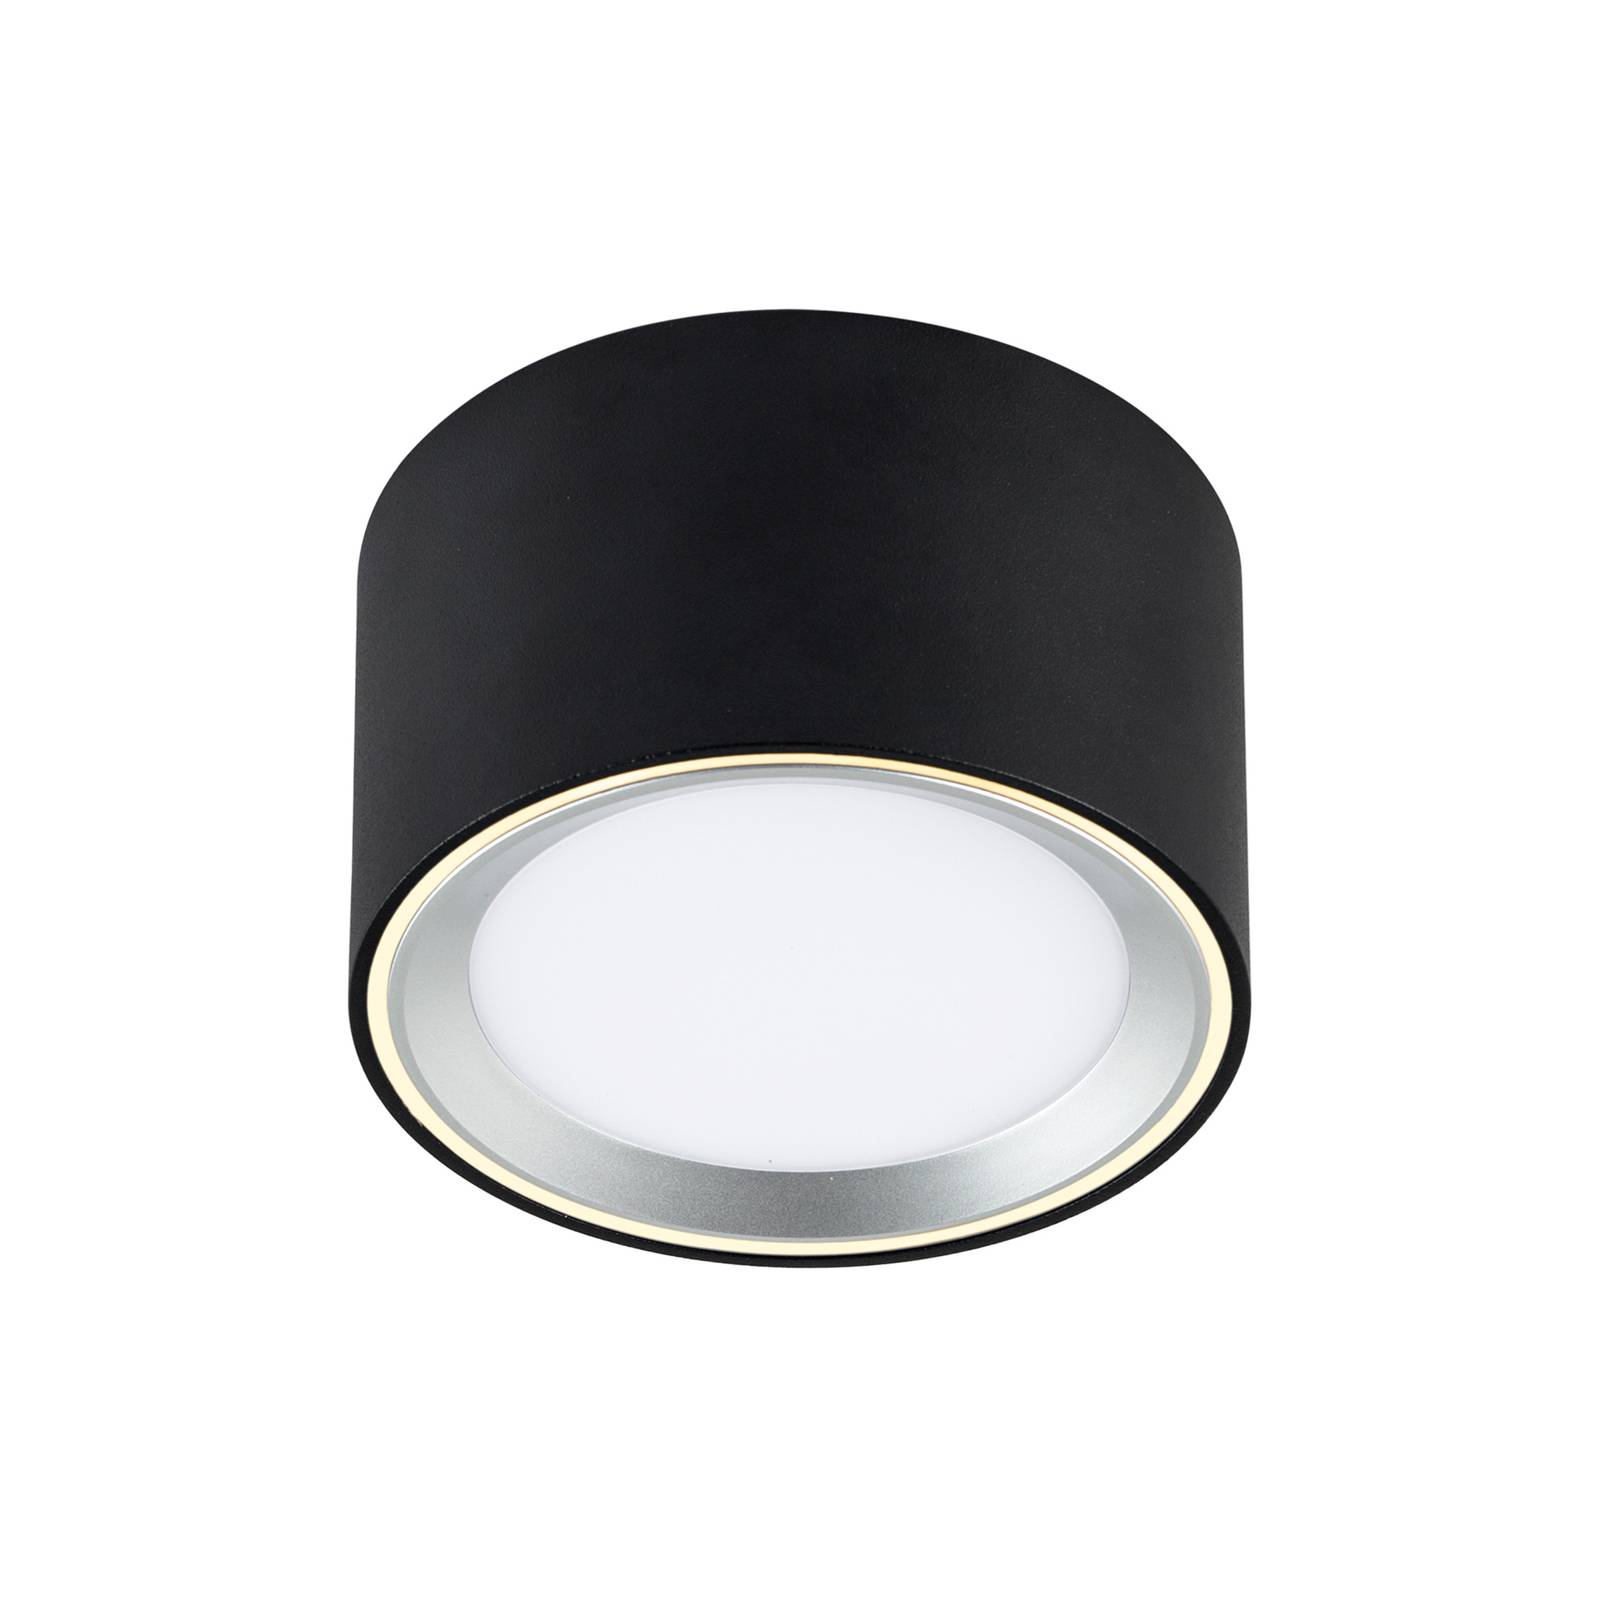 Nordlux LED-Downlight Fallon 3-Step-dim, schwarz/stahl